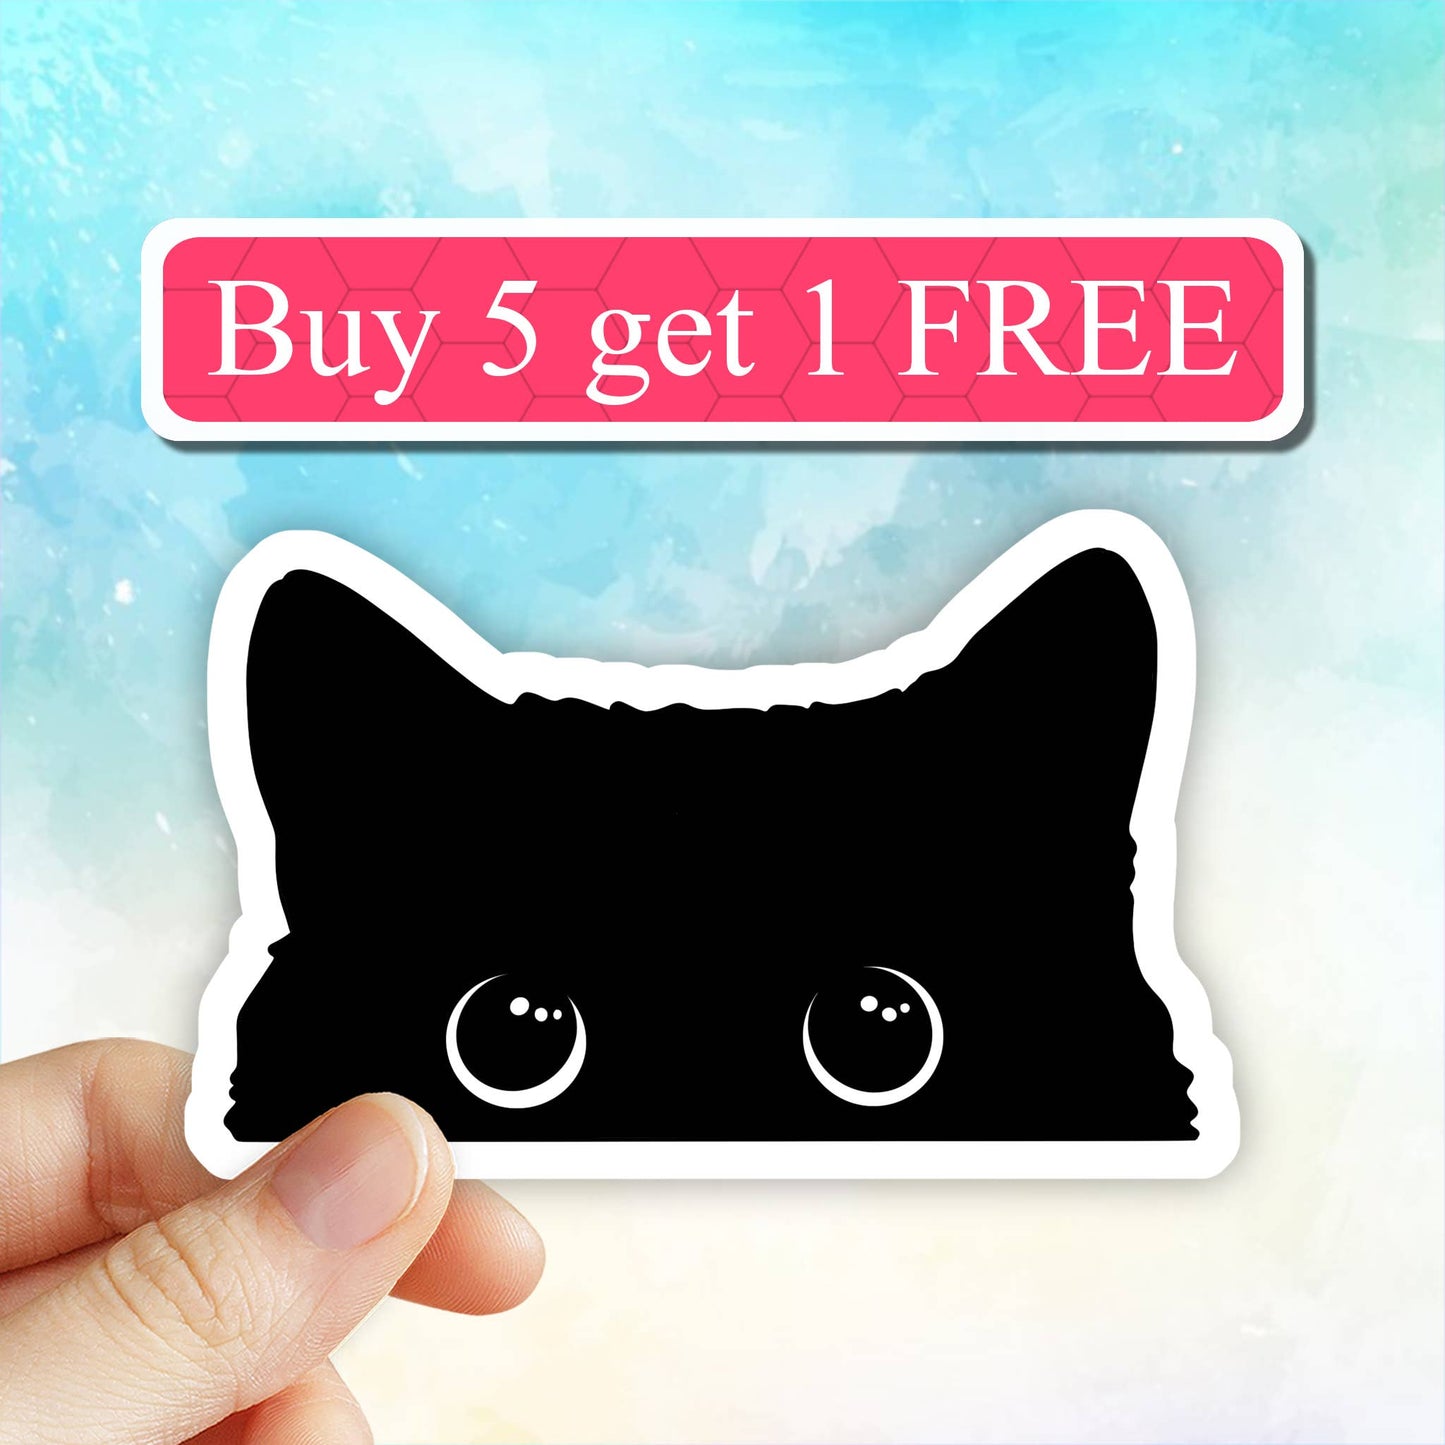 Black peeking cat Meme Sticker, funny Black cat decal, car: 2" (Mini)